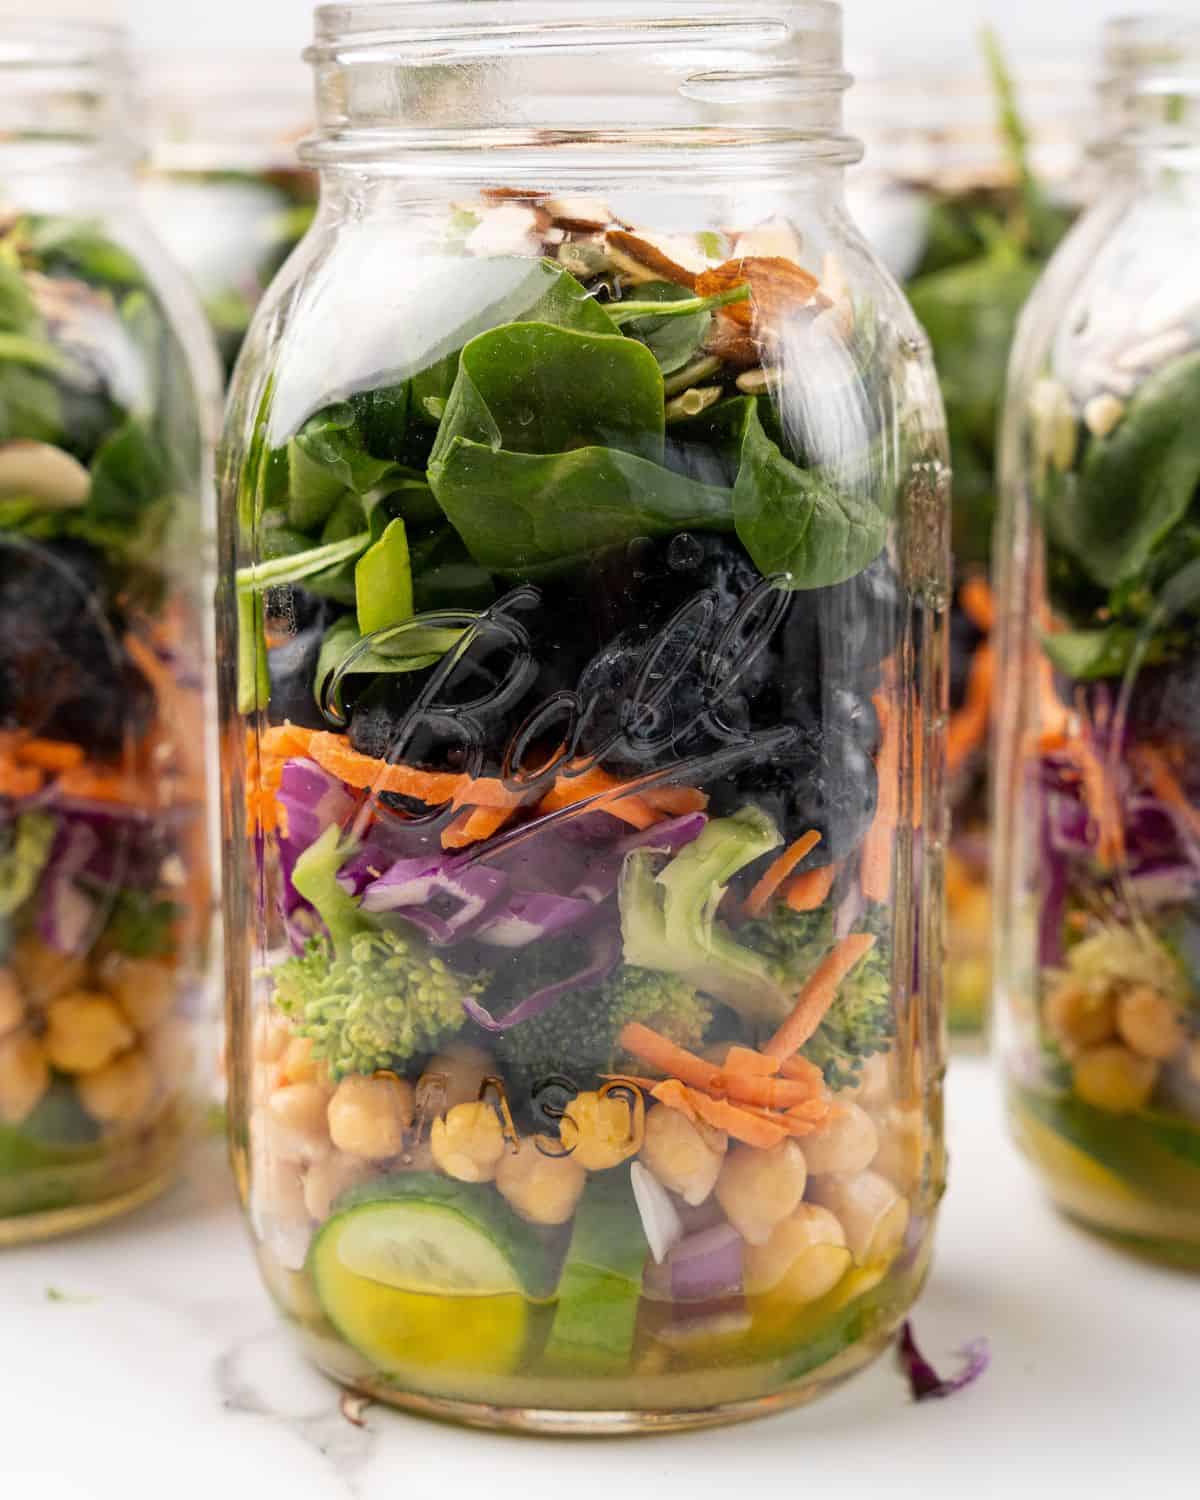 The Ultimate Guide to Vegan Mason Jar Salads - Health My Lifestyle